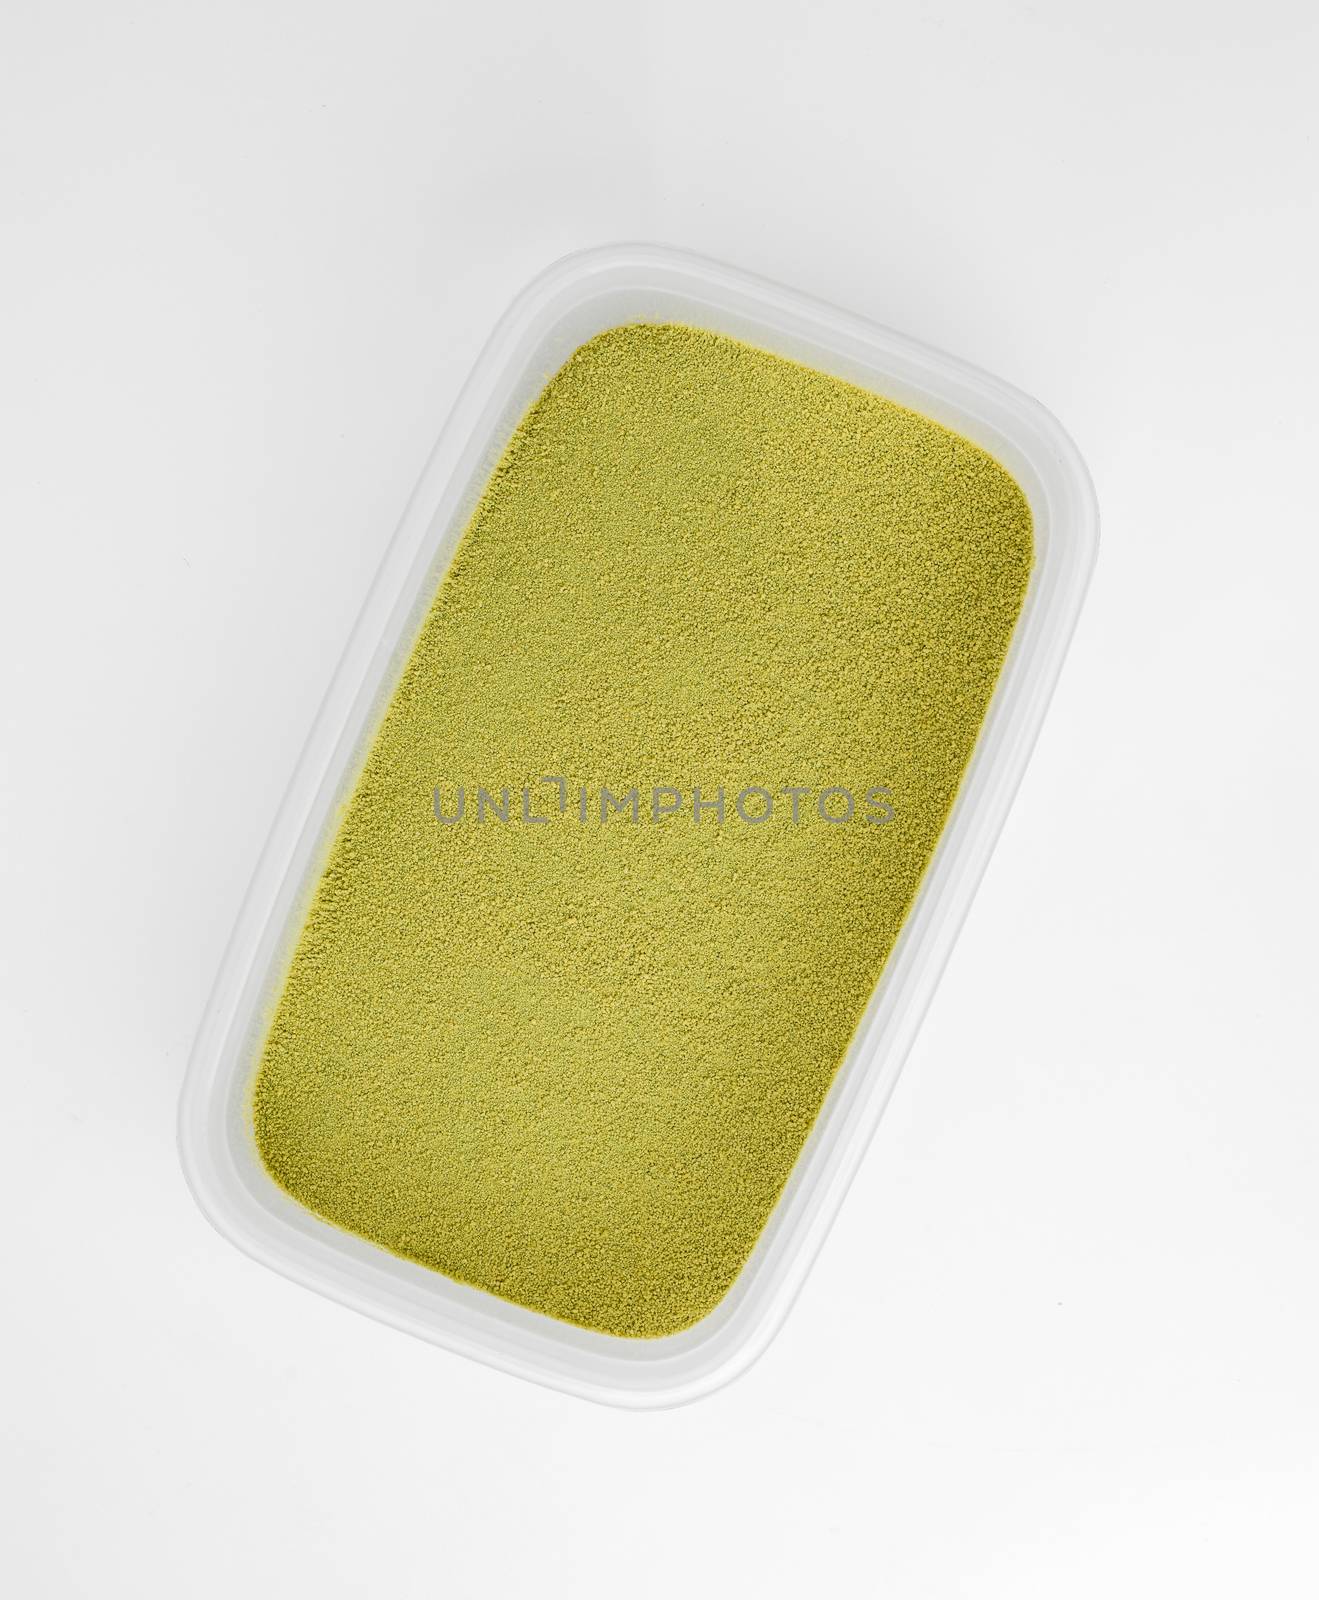 green tea powder in a box by antpkr